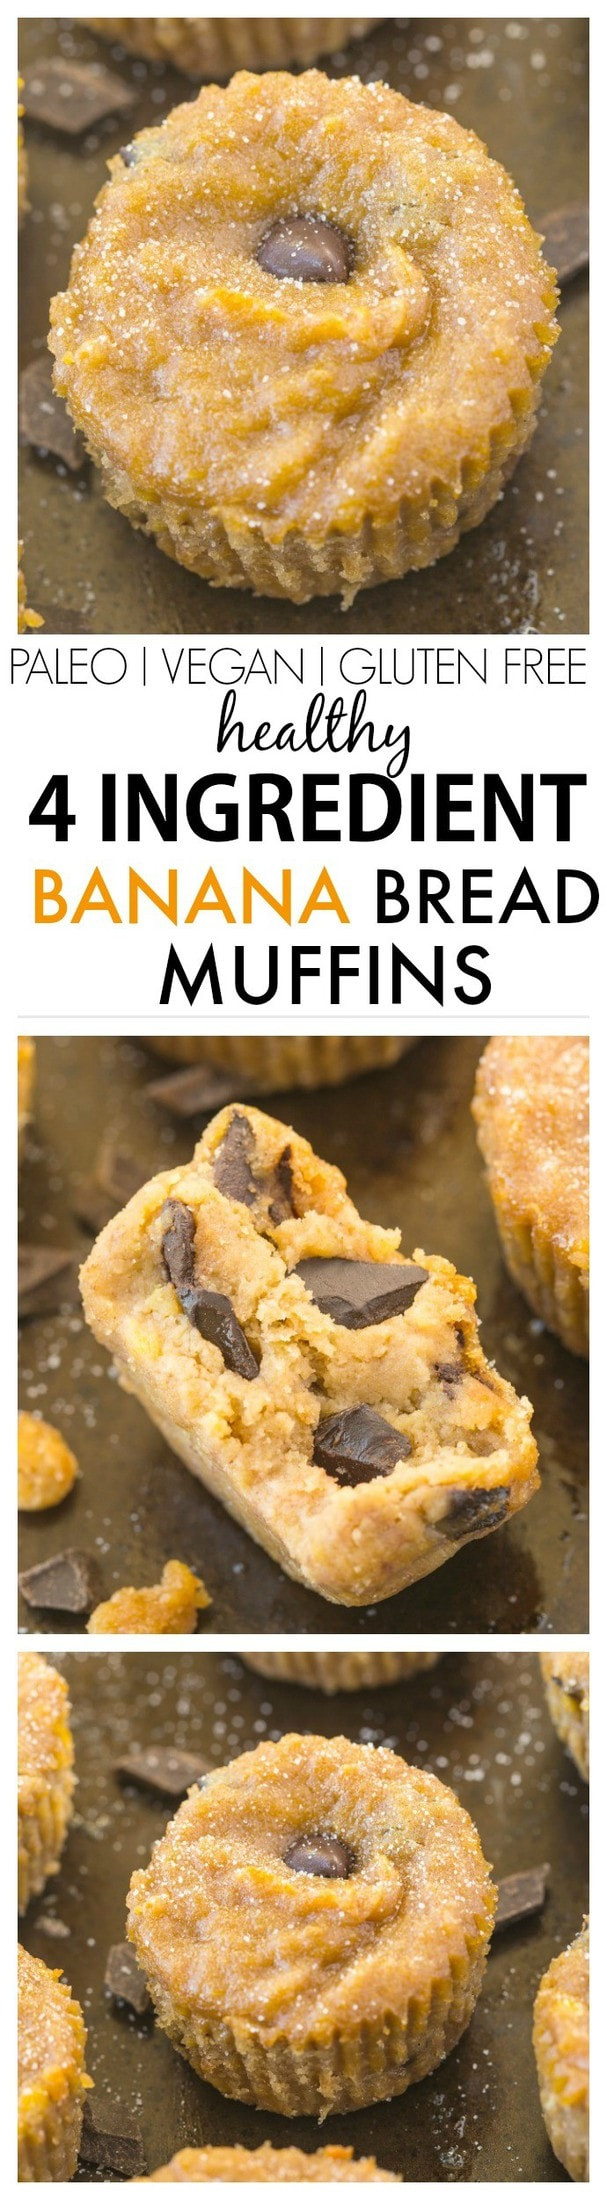 Banana Bread Muffins Healthy
 Healthy 4 Ingre nt Banana Bread Muffins Paleo Vegan